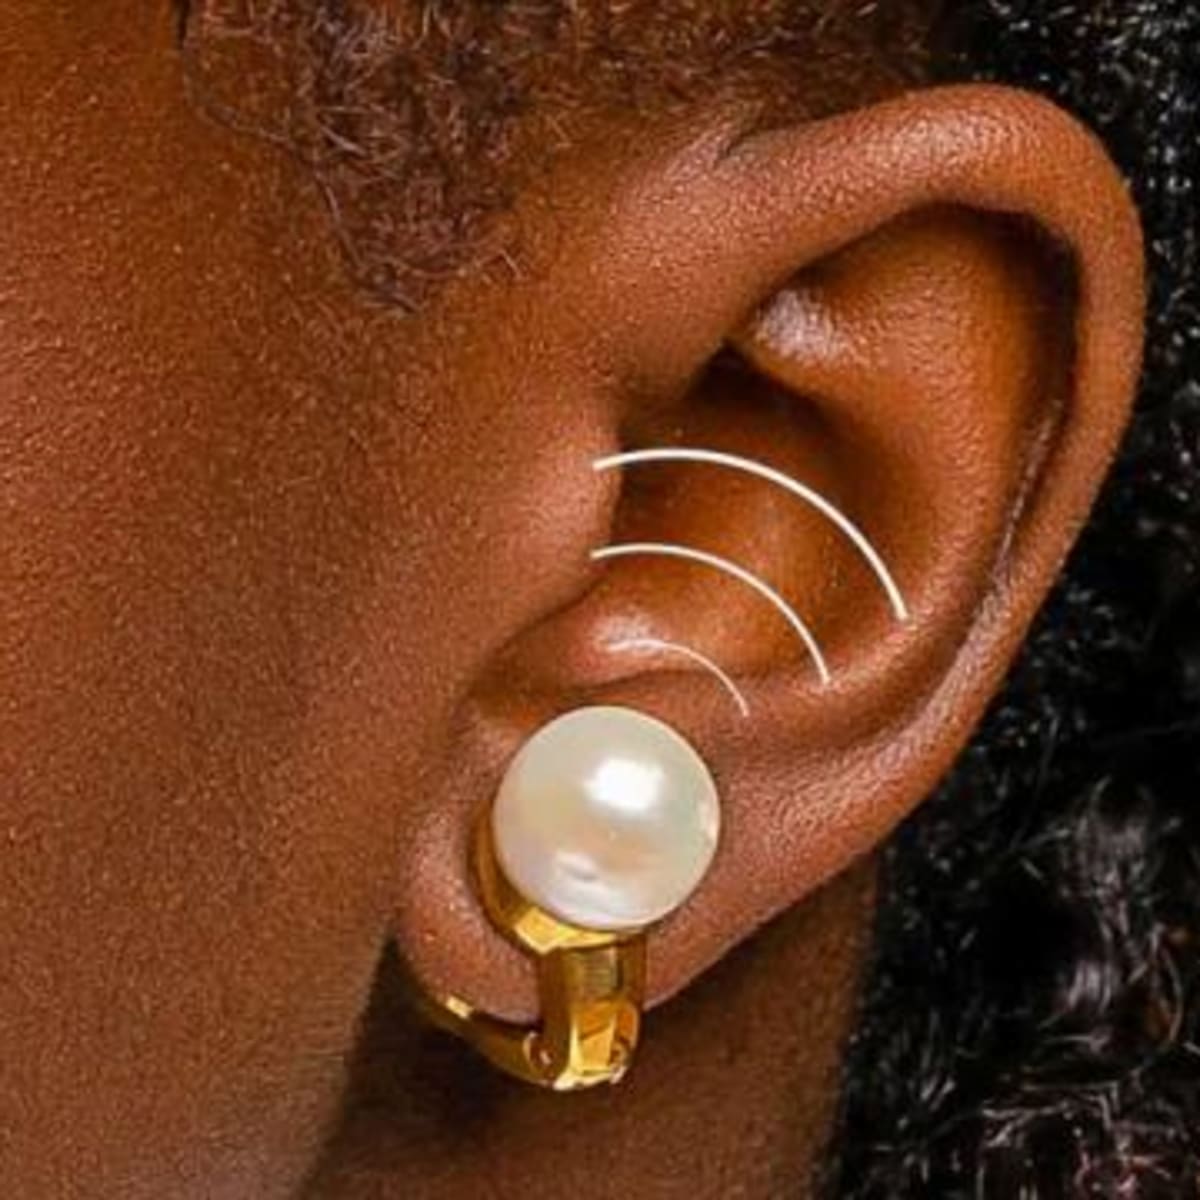 Bluetooth earrings for millennial fashionistas  Newsmobile